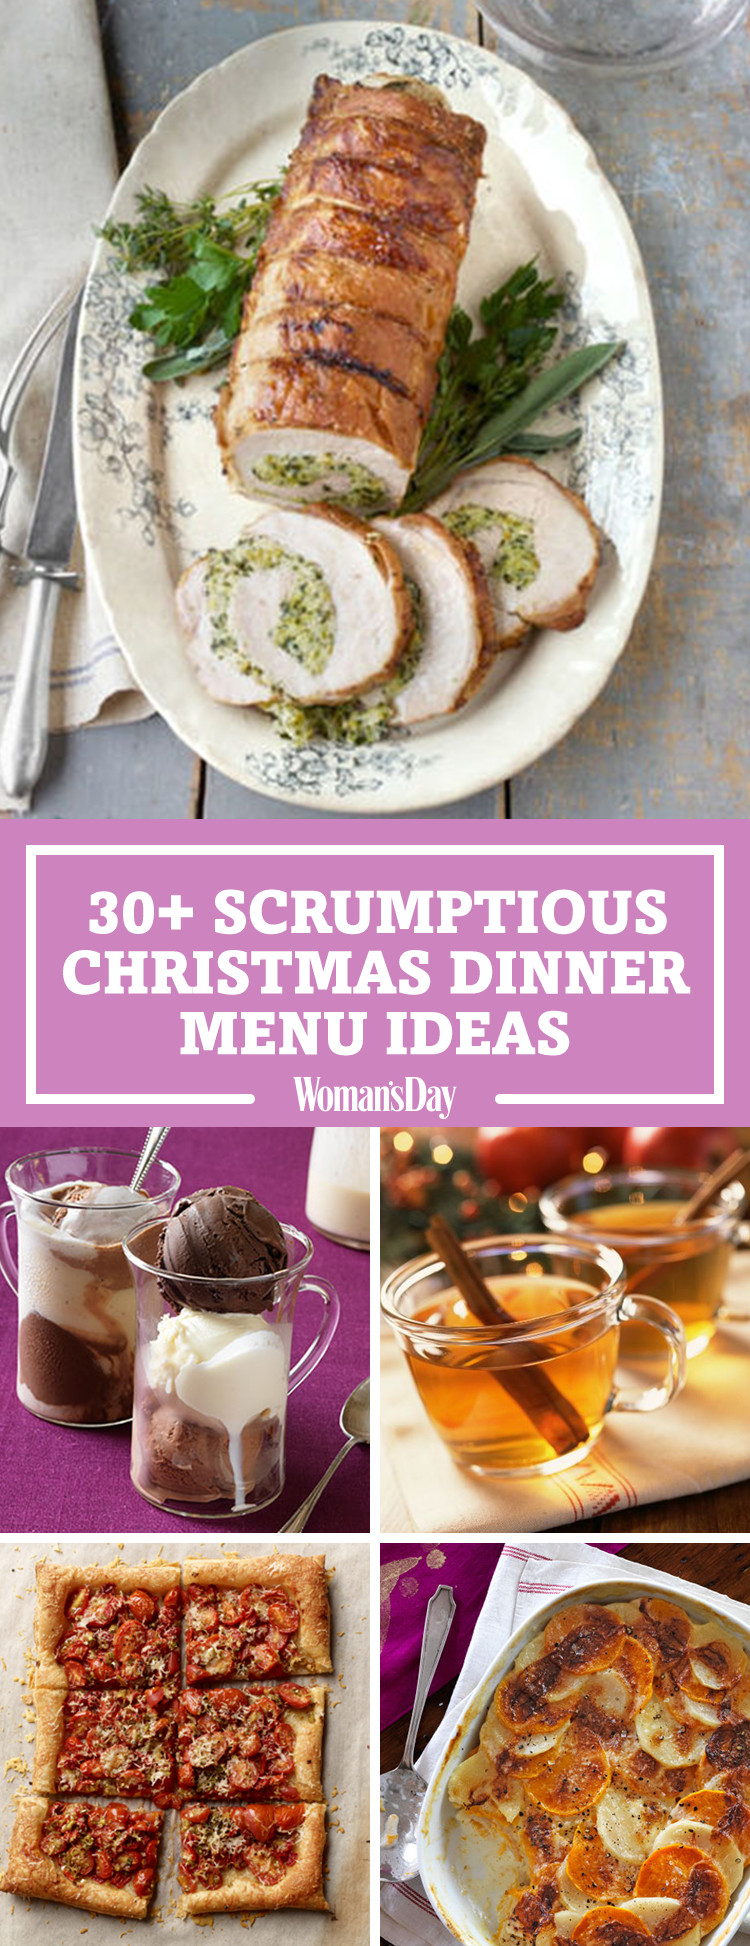 Xmas Dinner Ideas
 Best Christmas Dinner Menu Ideas for 2017